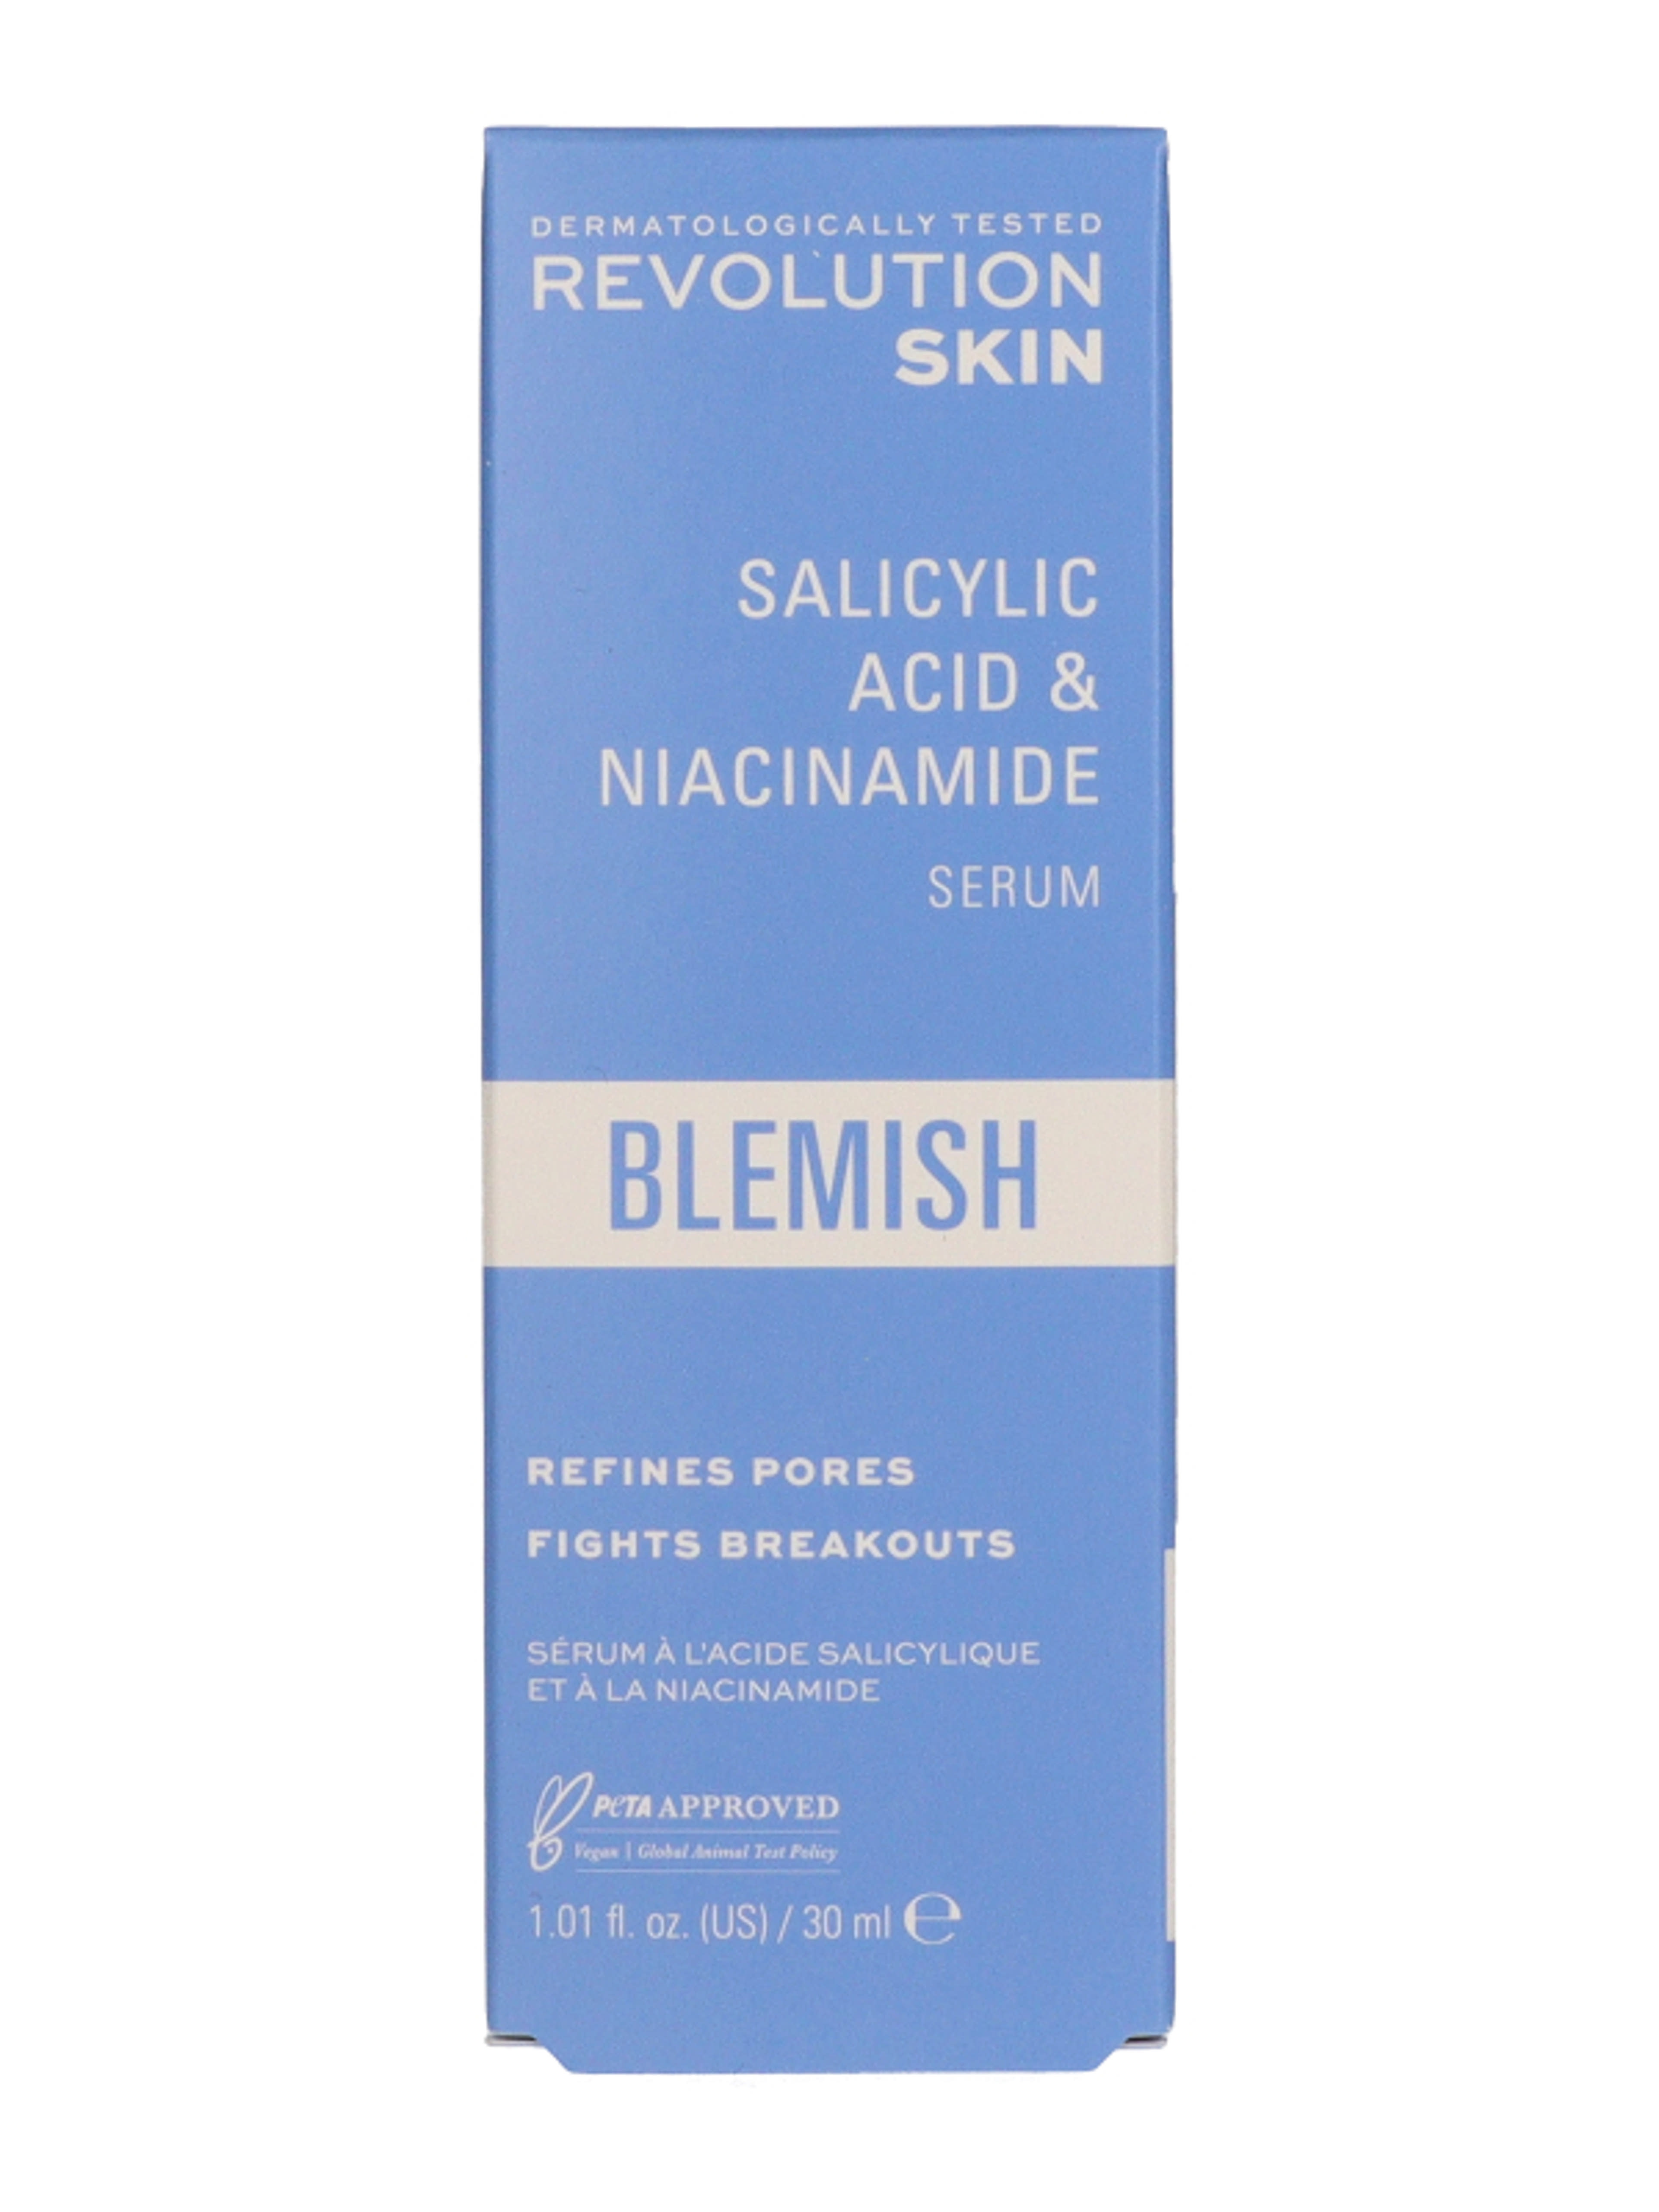 Revolution Skincare szérum szalicil savval és niacinamiddal - 30 ml